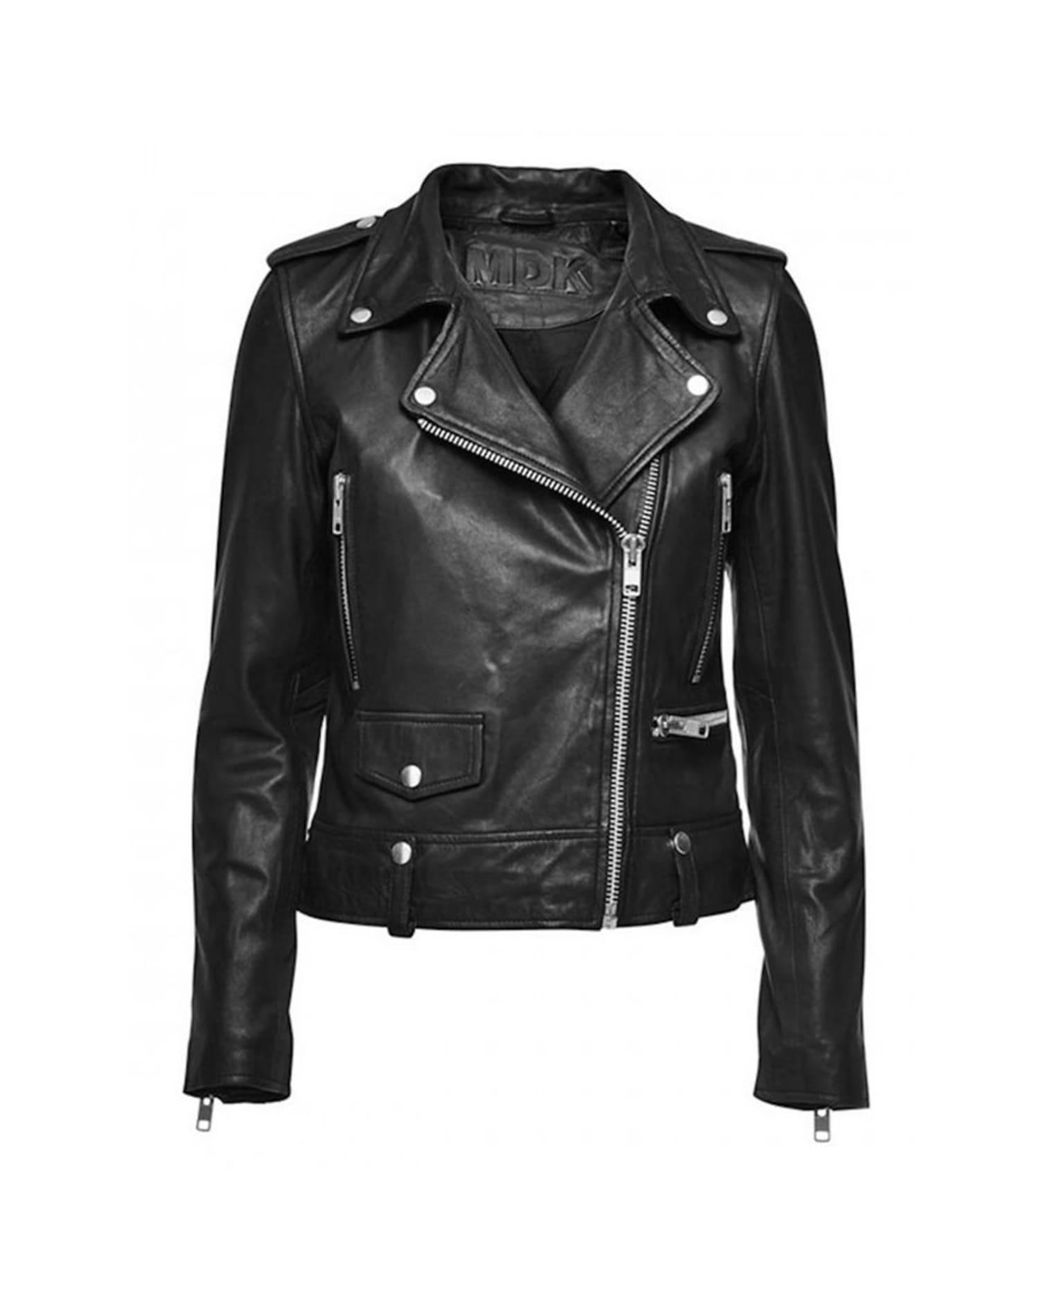 Mdk Black Seattle Leather Jacket | Lyst